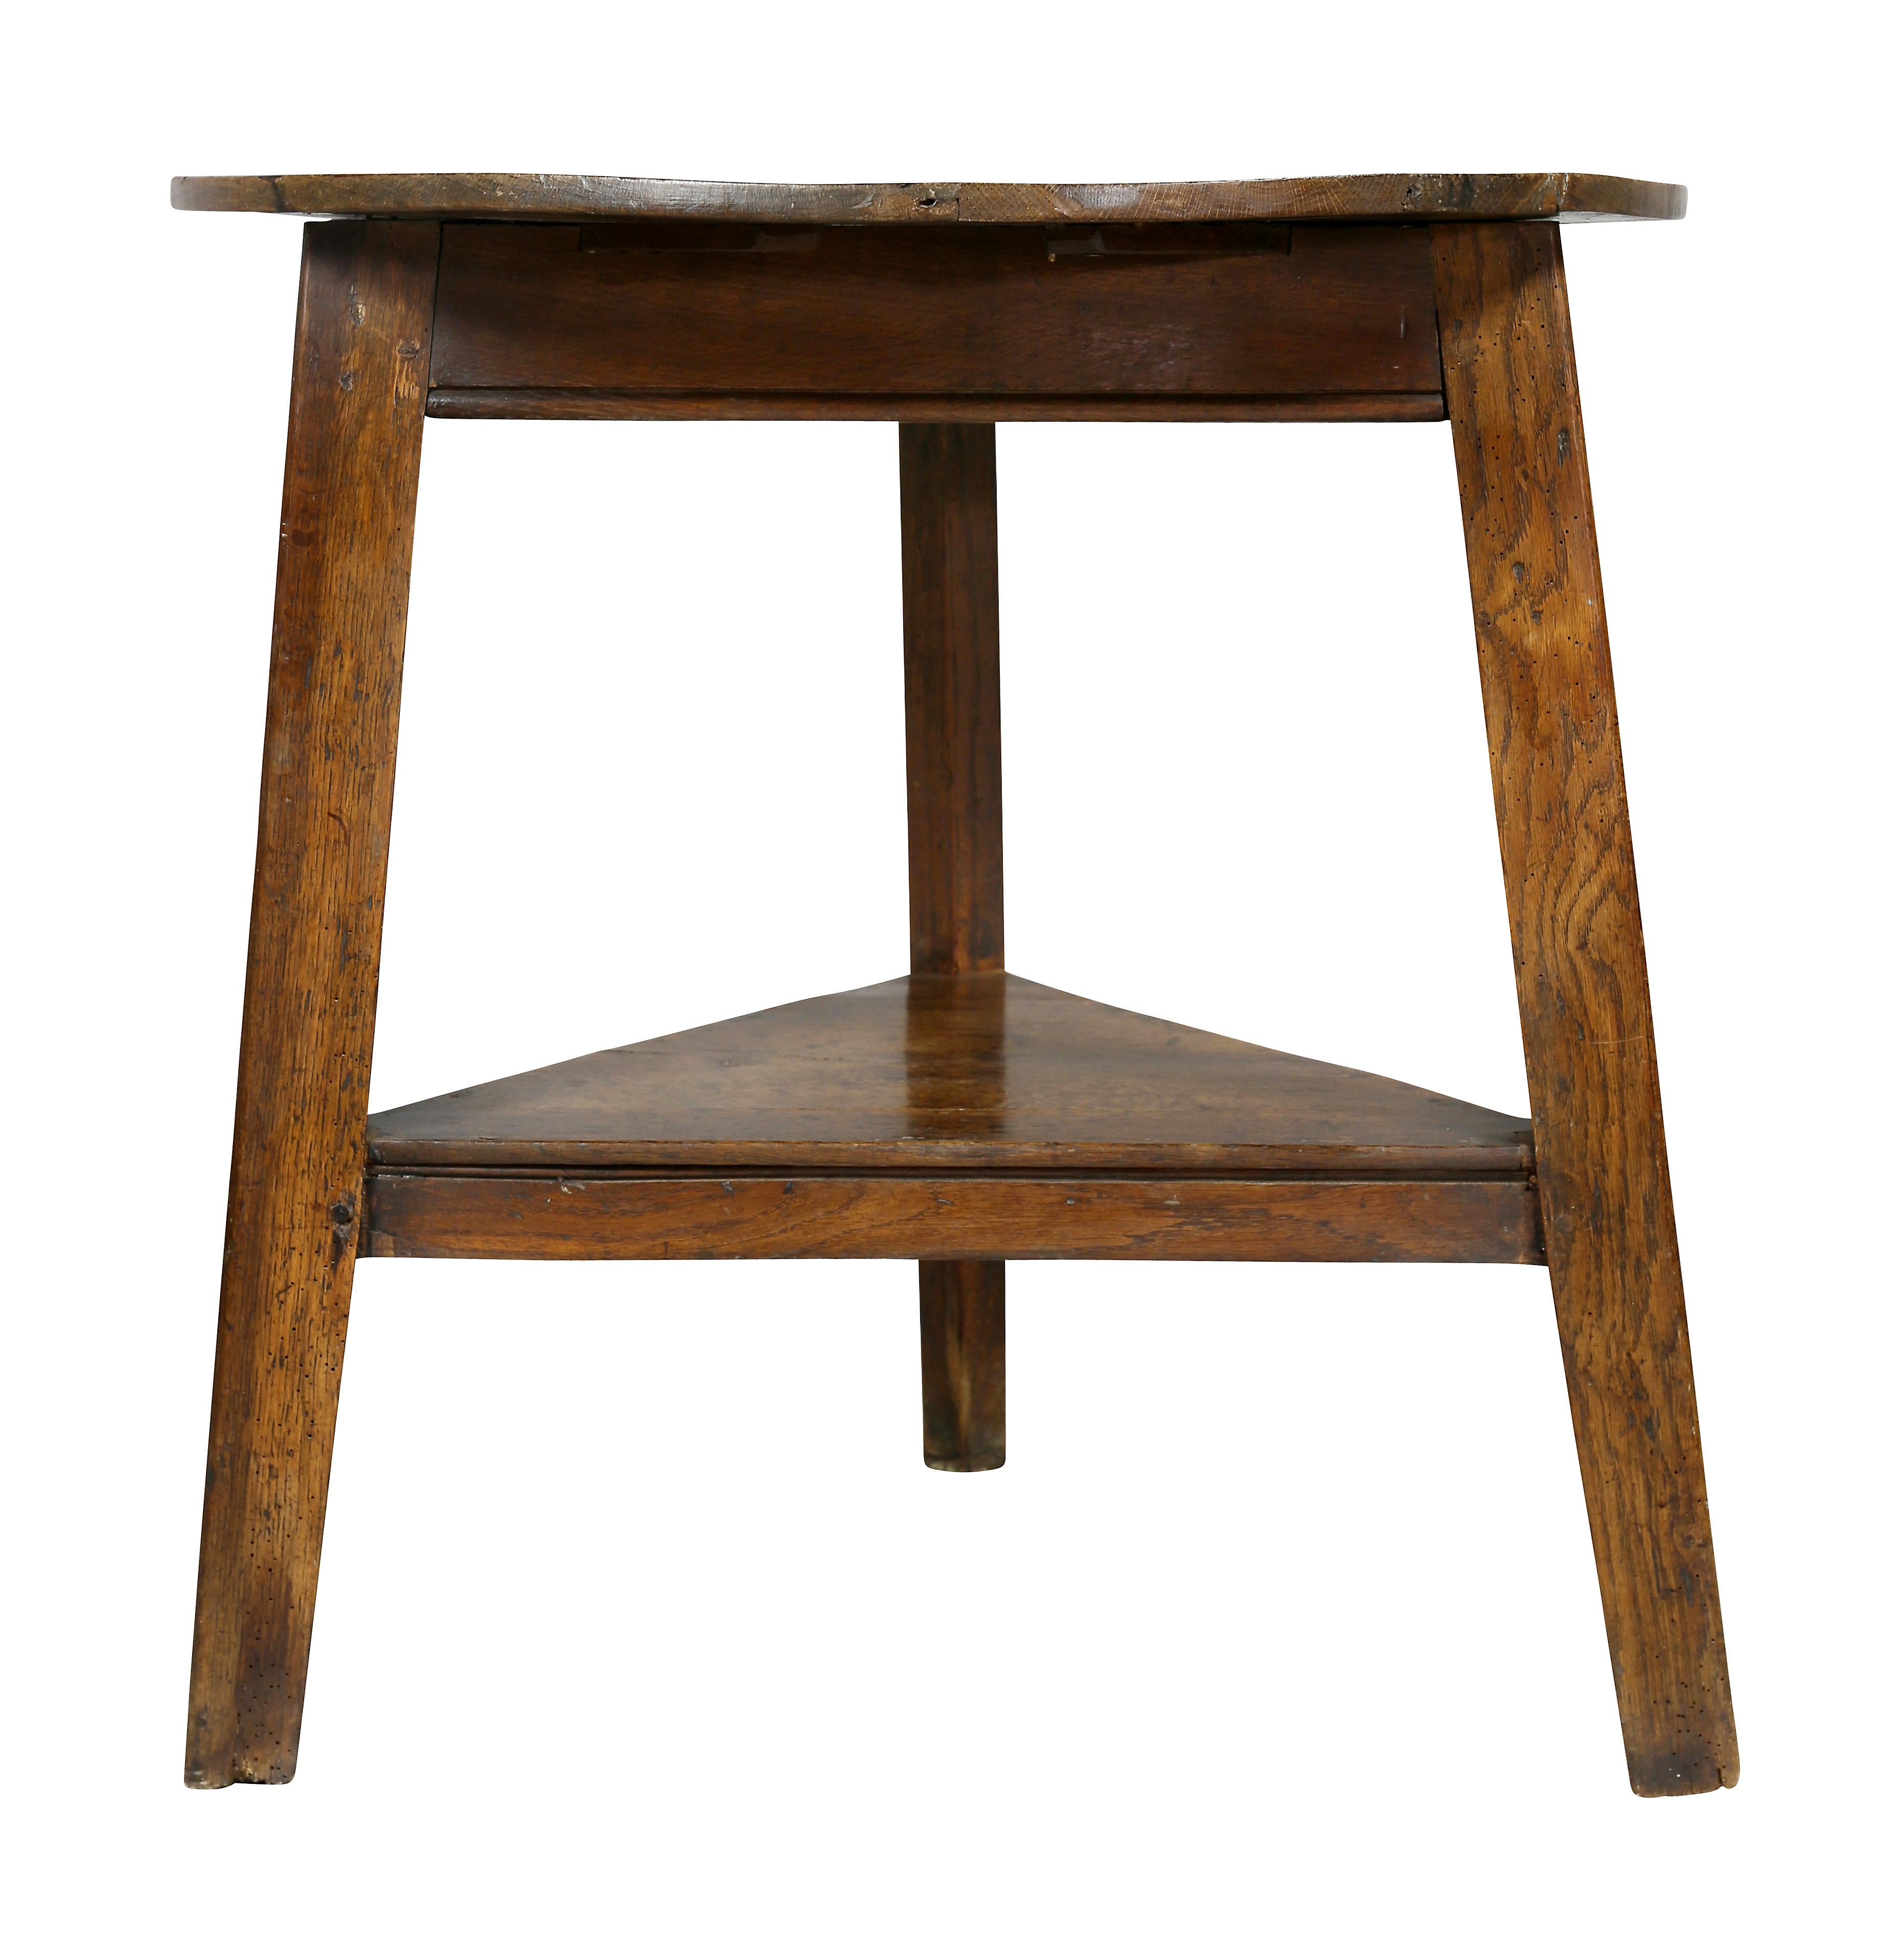 Early 19th Century English Oak Cricket Table